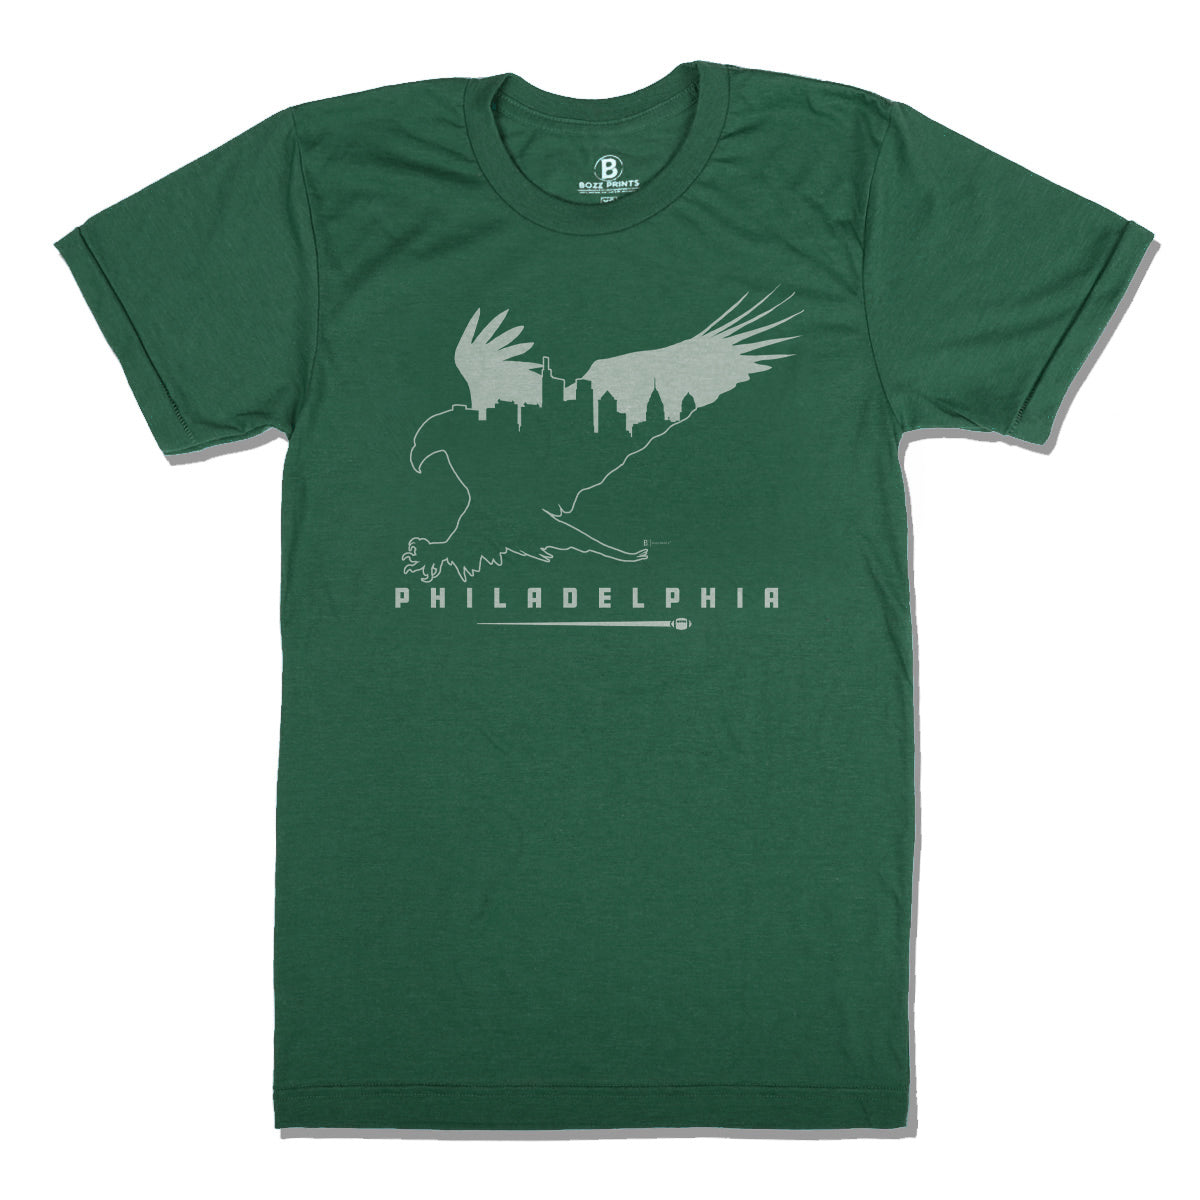 Philadelphia Football T-Shirt